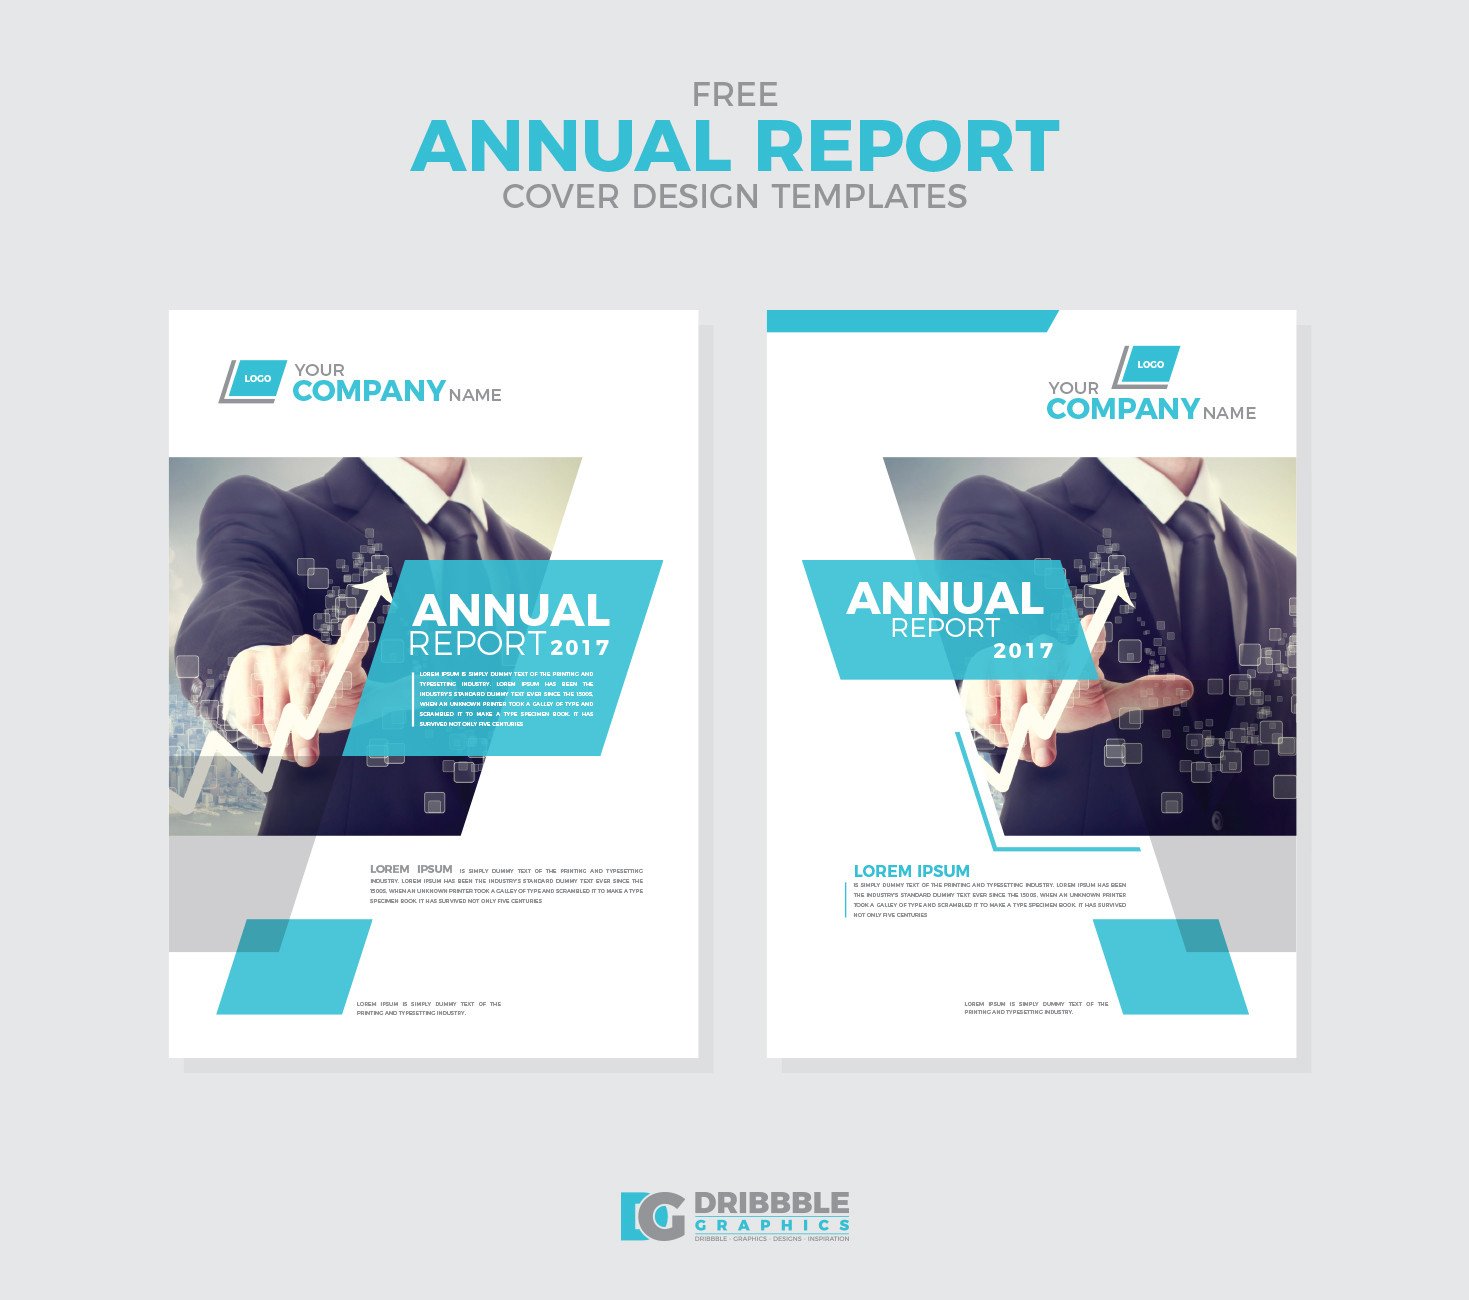 Free Annual Report Cover Design Templates